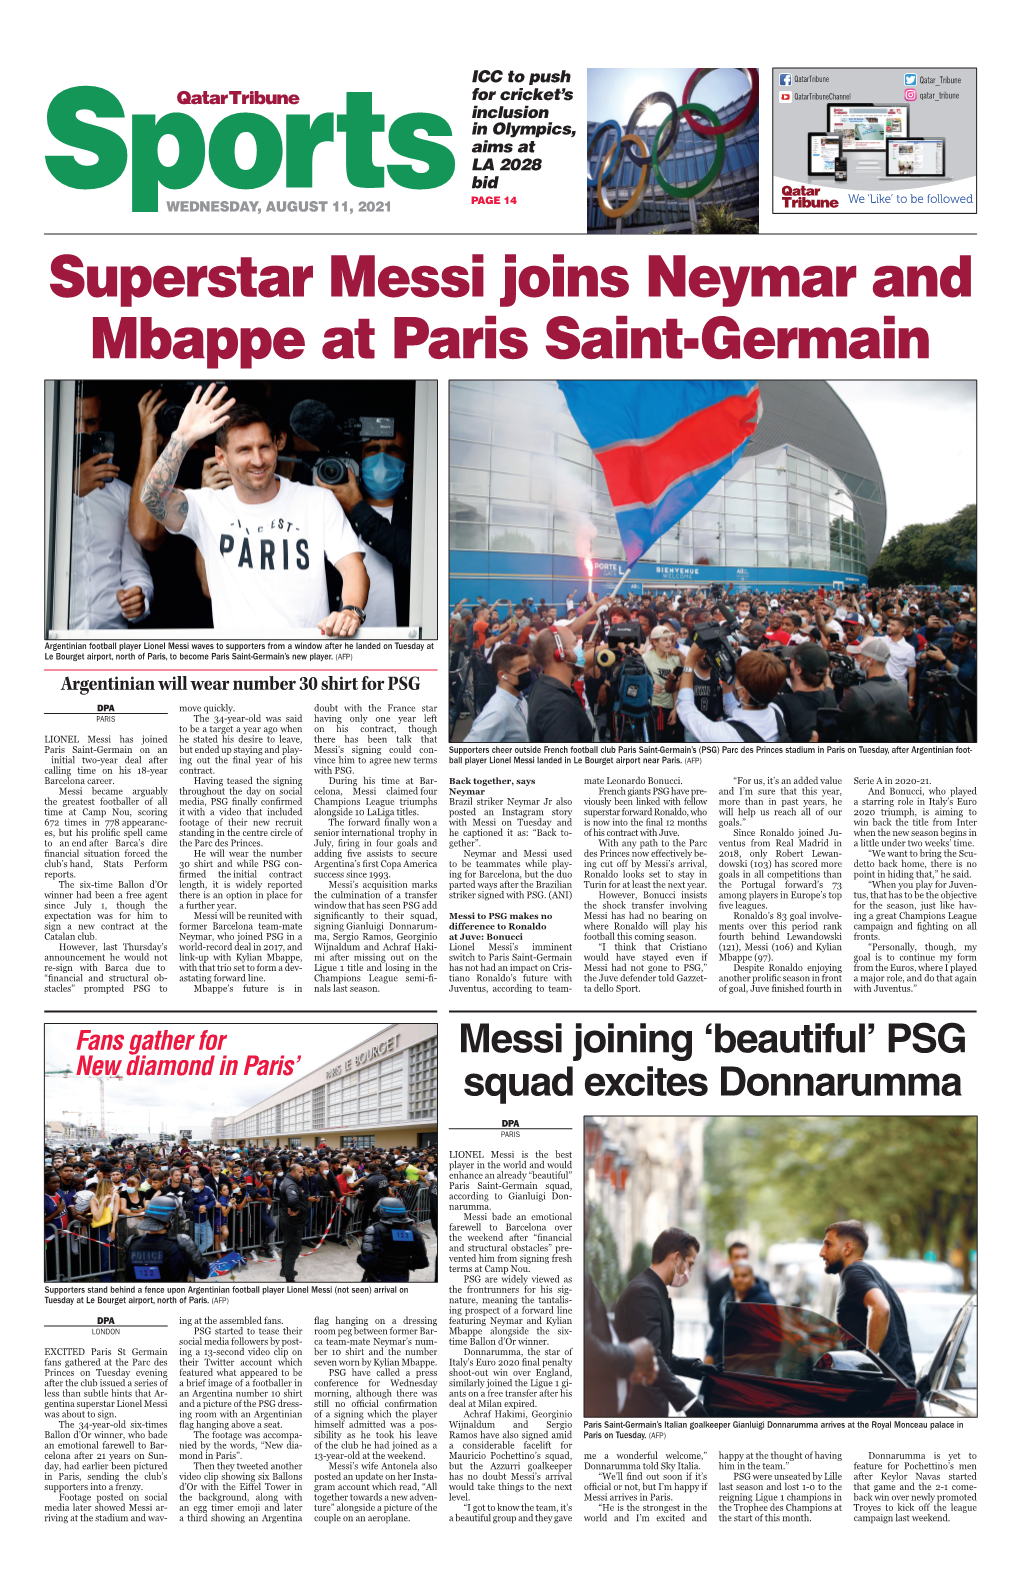 Superstar Messi Joins Neymar and Mbappe at Paris Saint-Germain